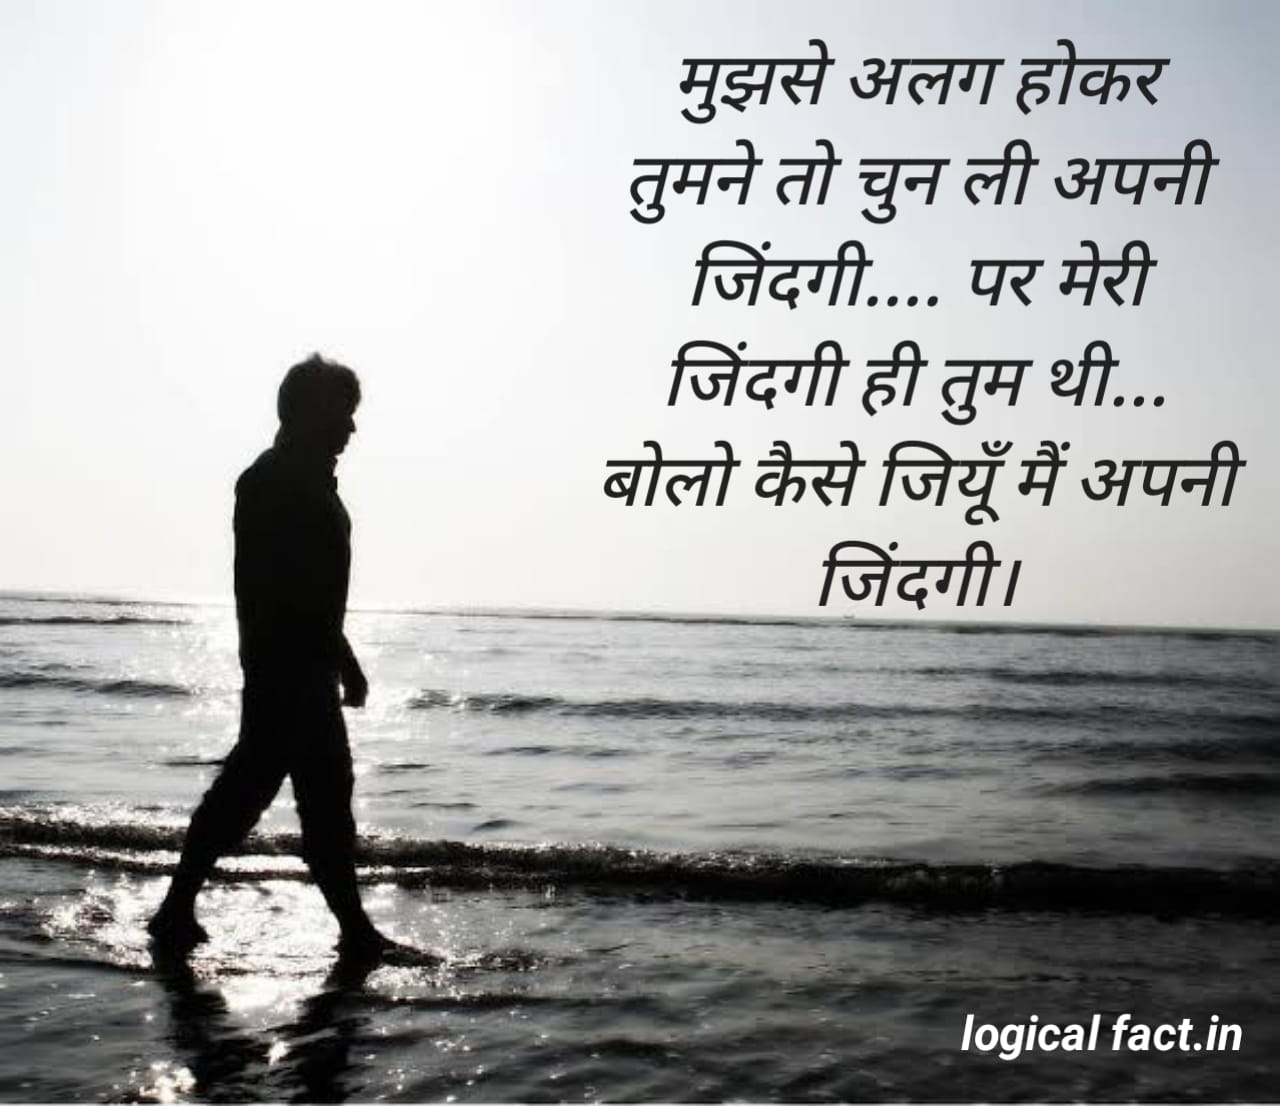 Dard bhari Shayari photo | Shayari Images - Logical Fact